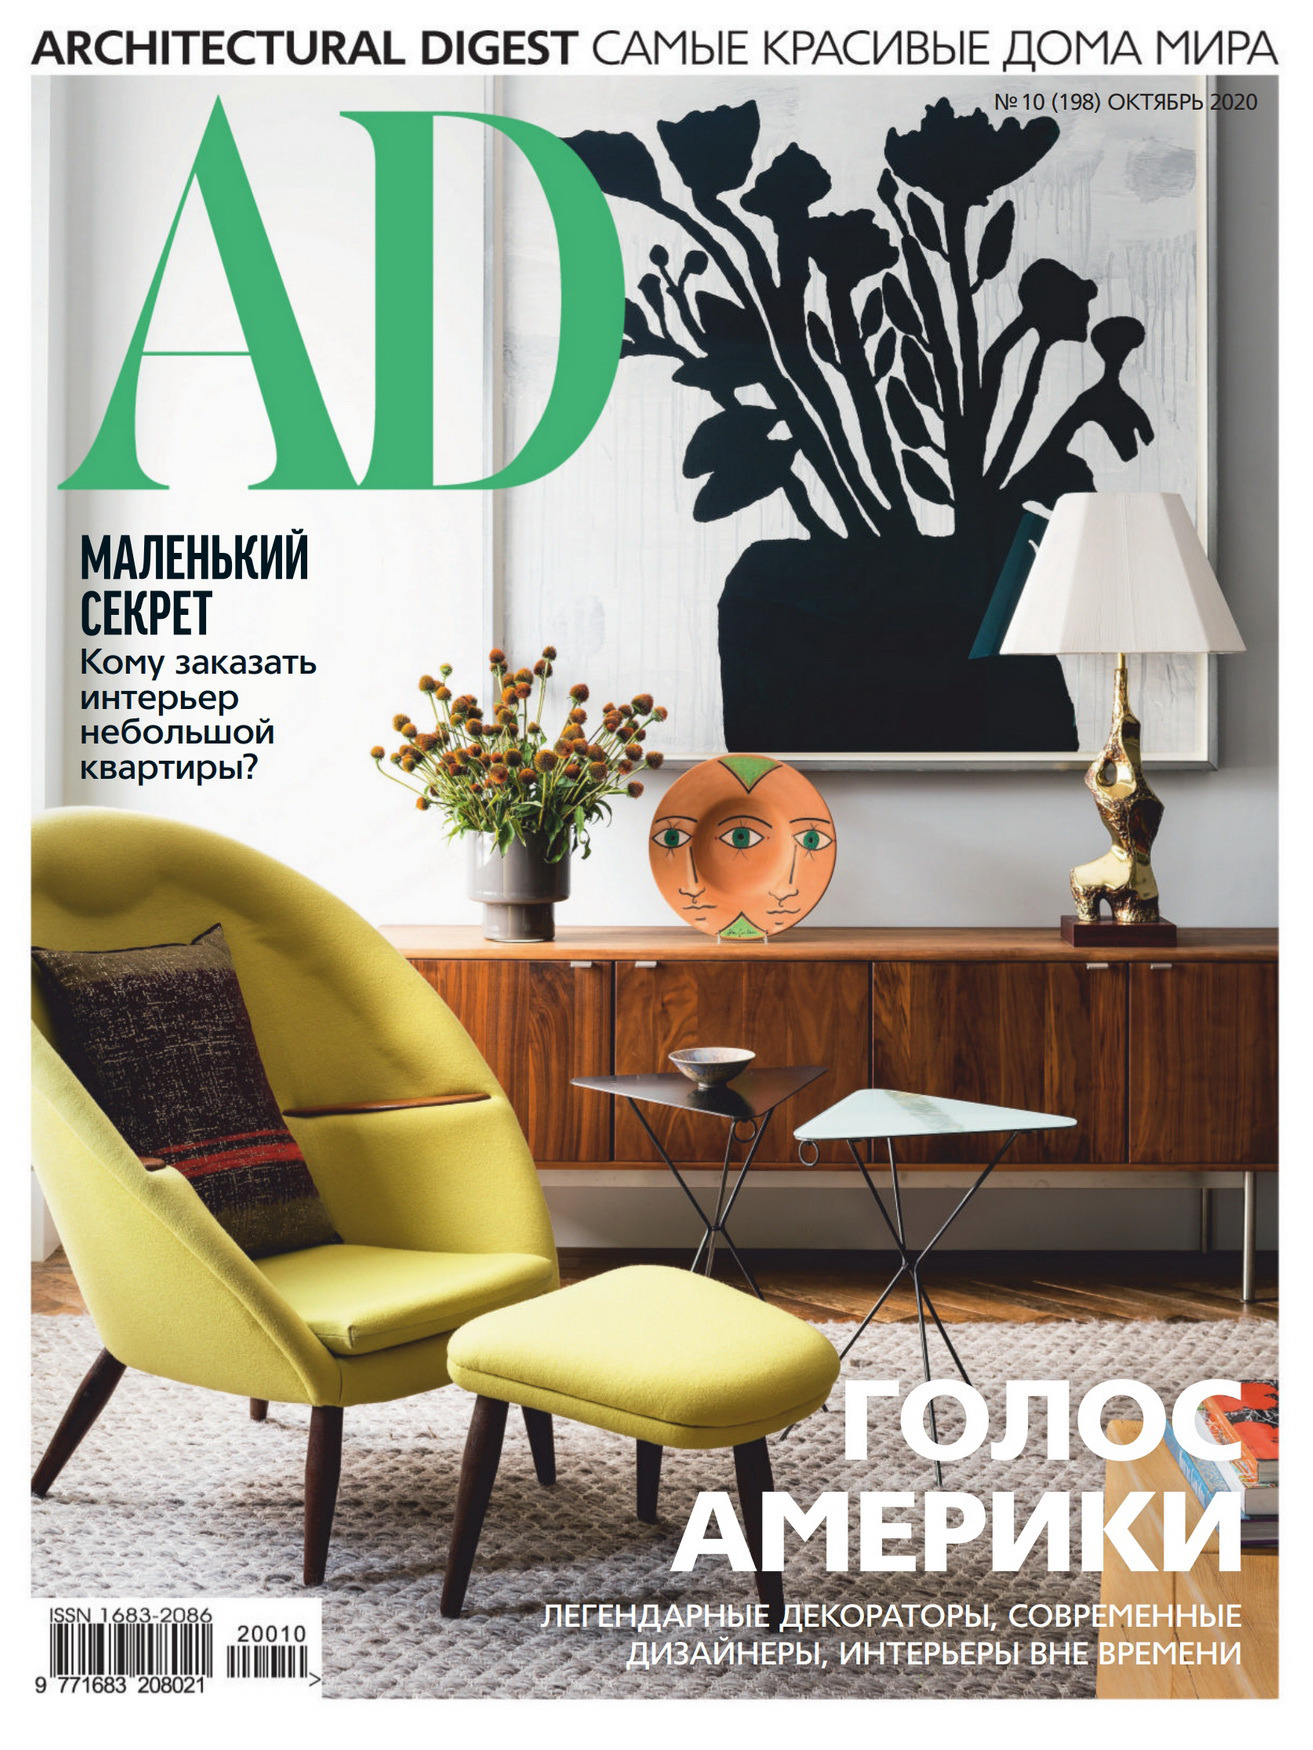 《AD》俄罗斯版室内室外设计杂志2020年10月号